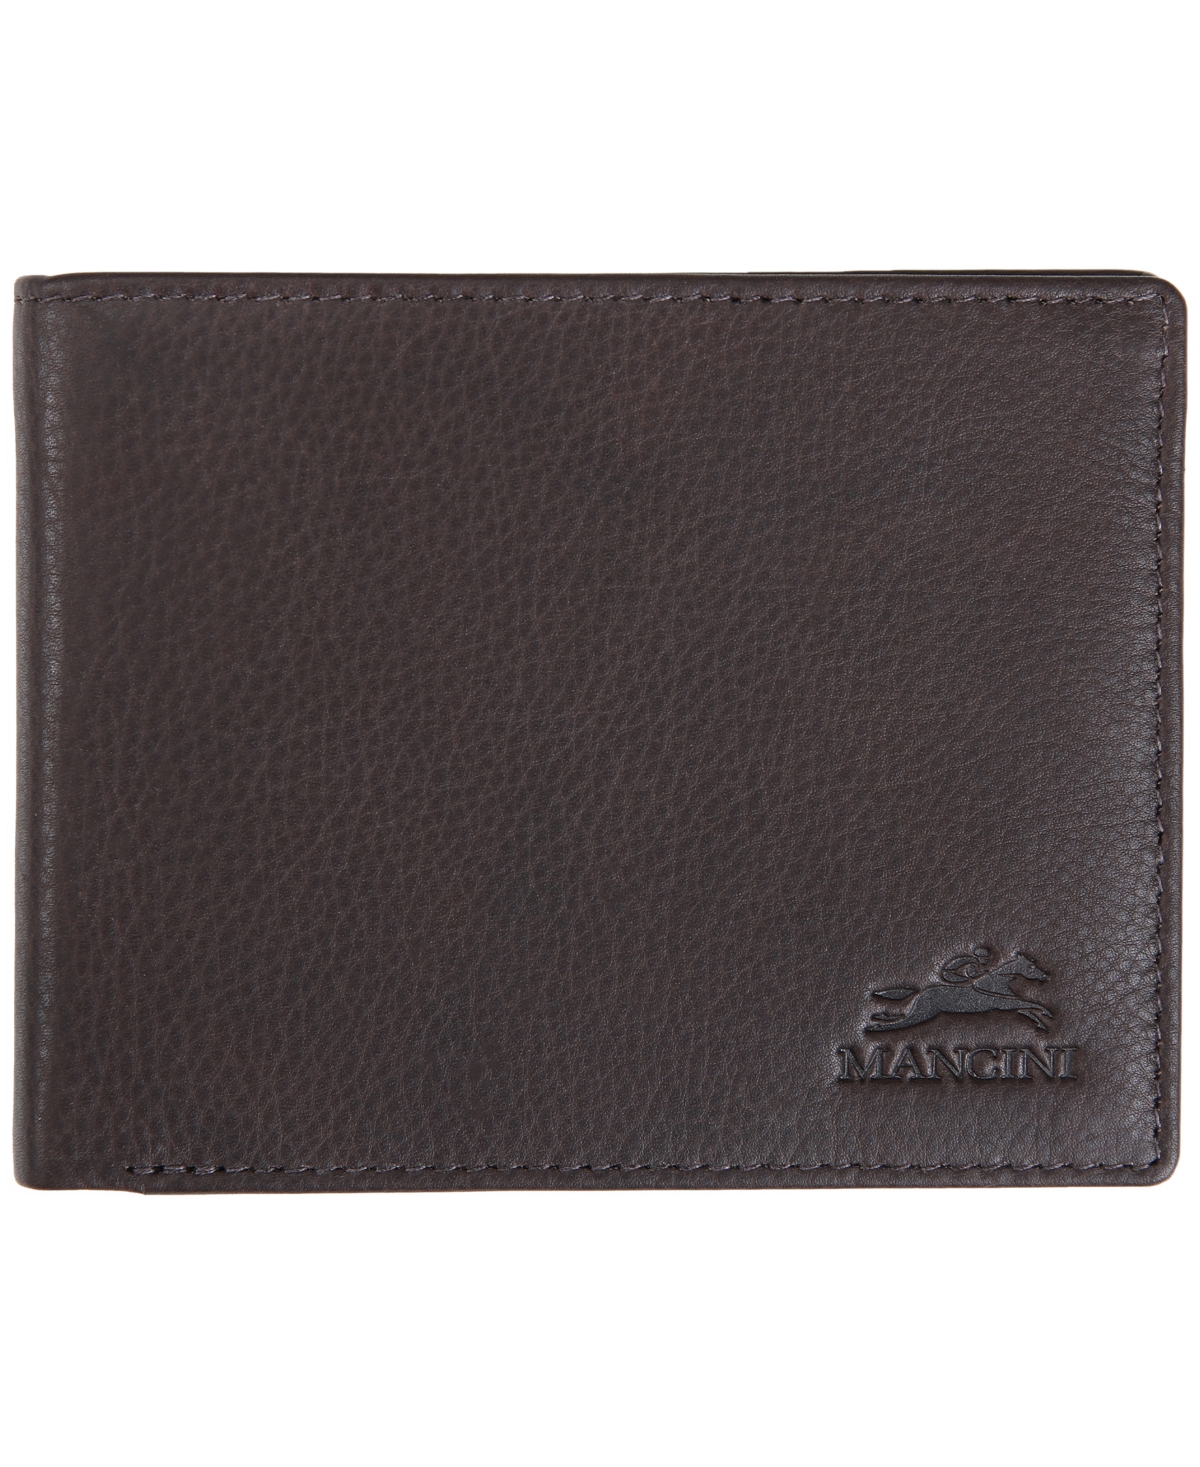 Mancini Men's Monterrey Collection Left Wing Wallet